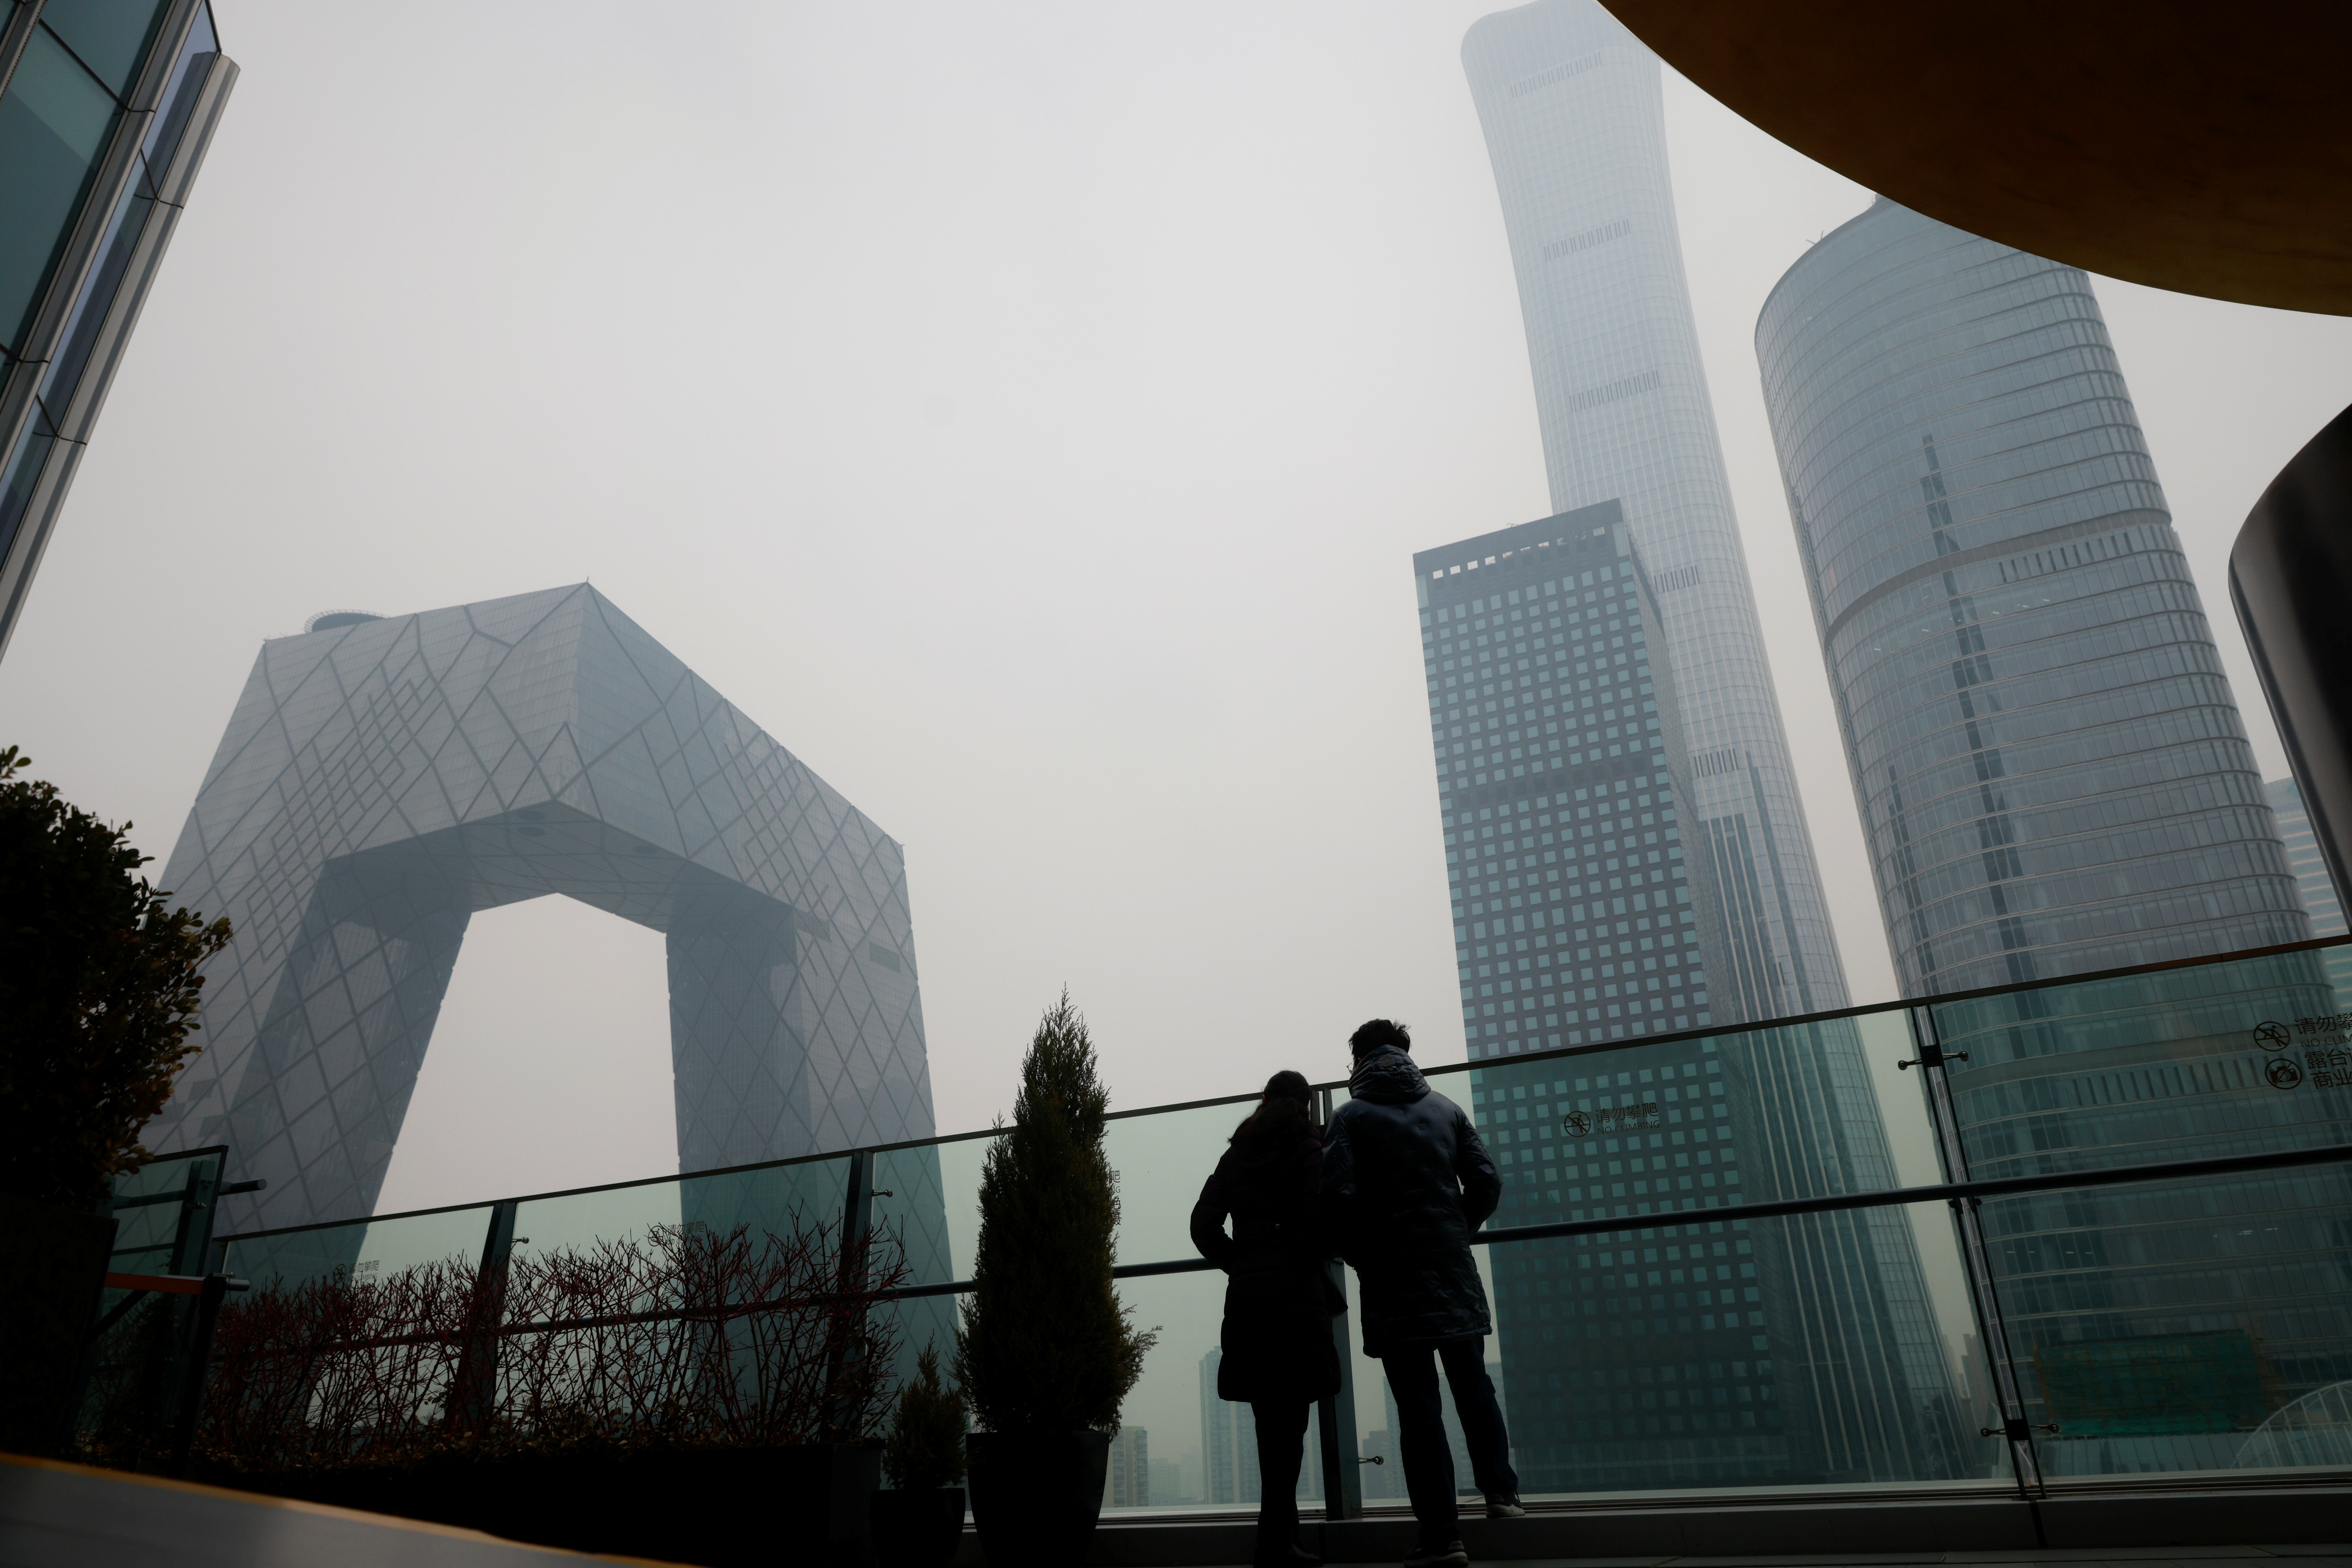 Hazy day in Beijing